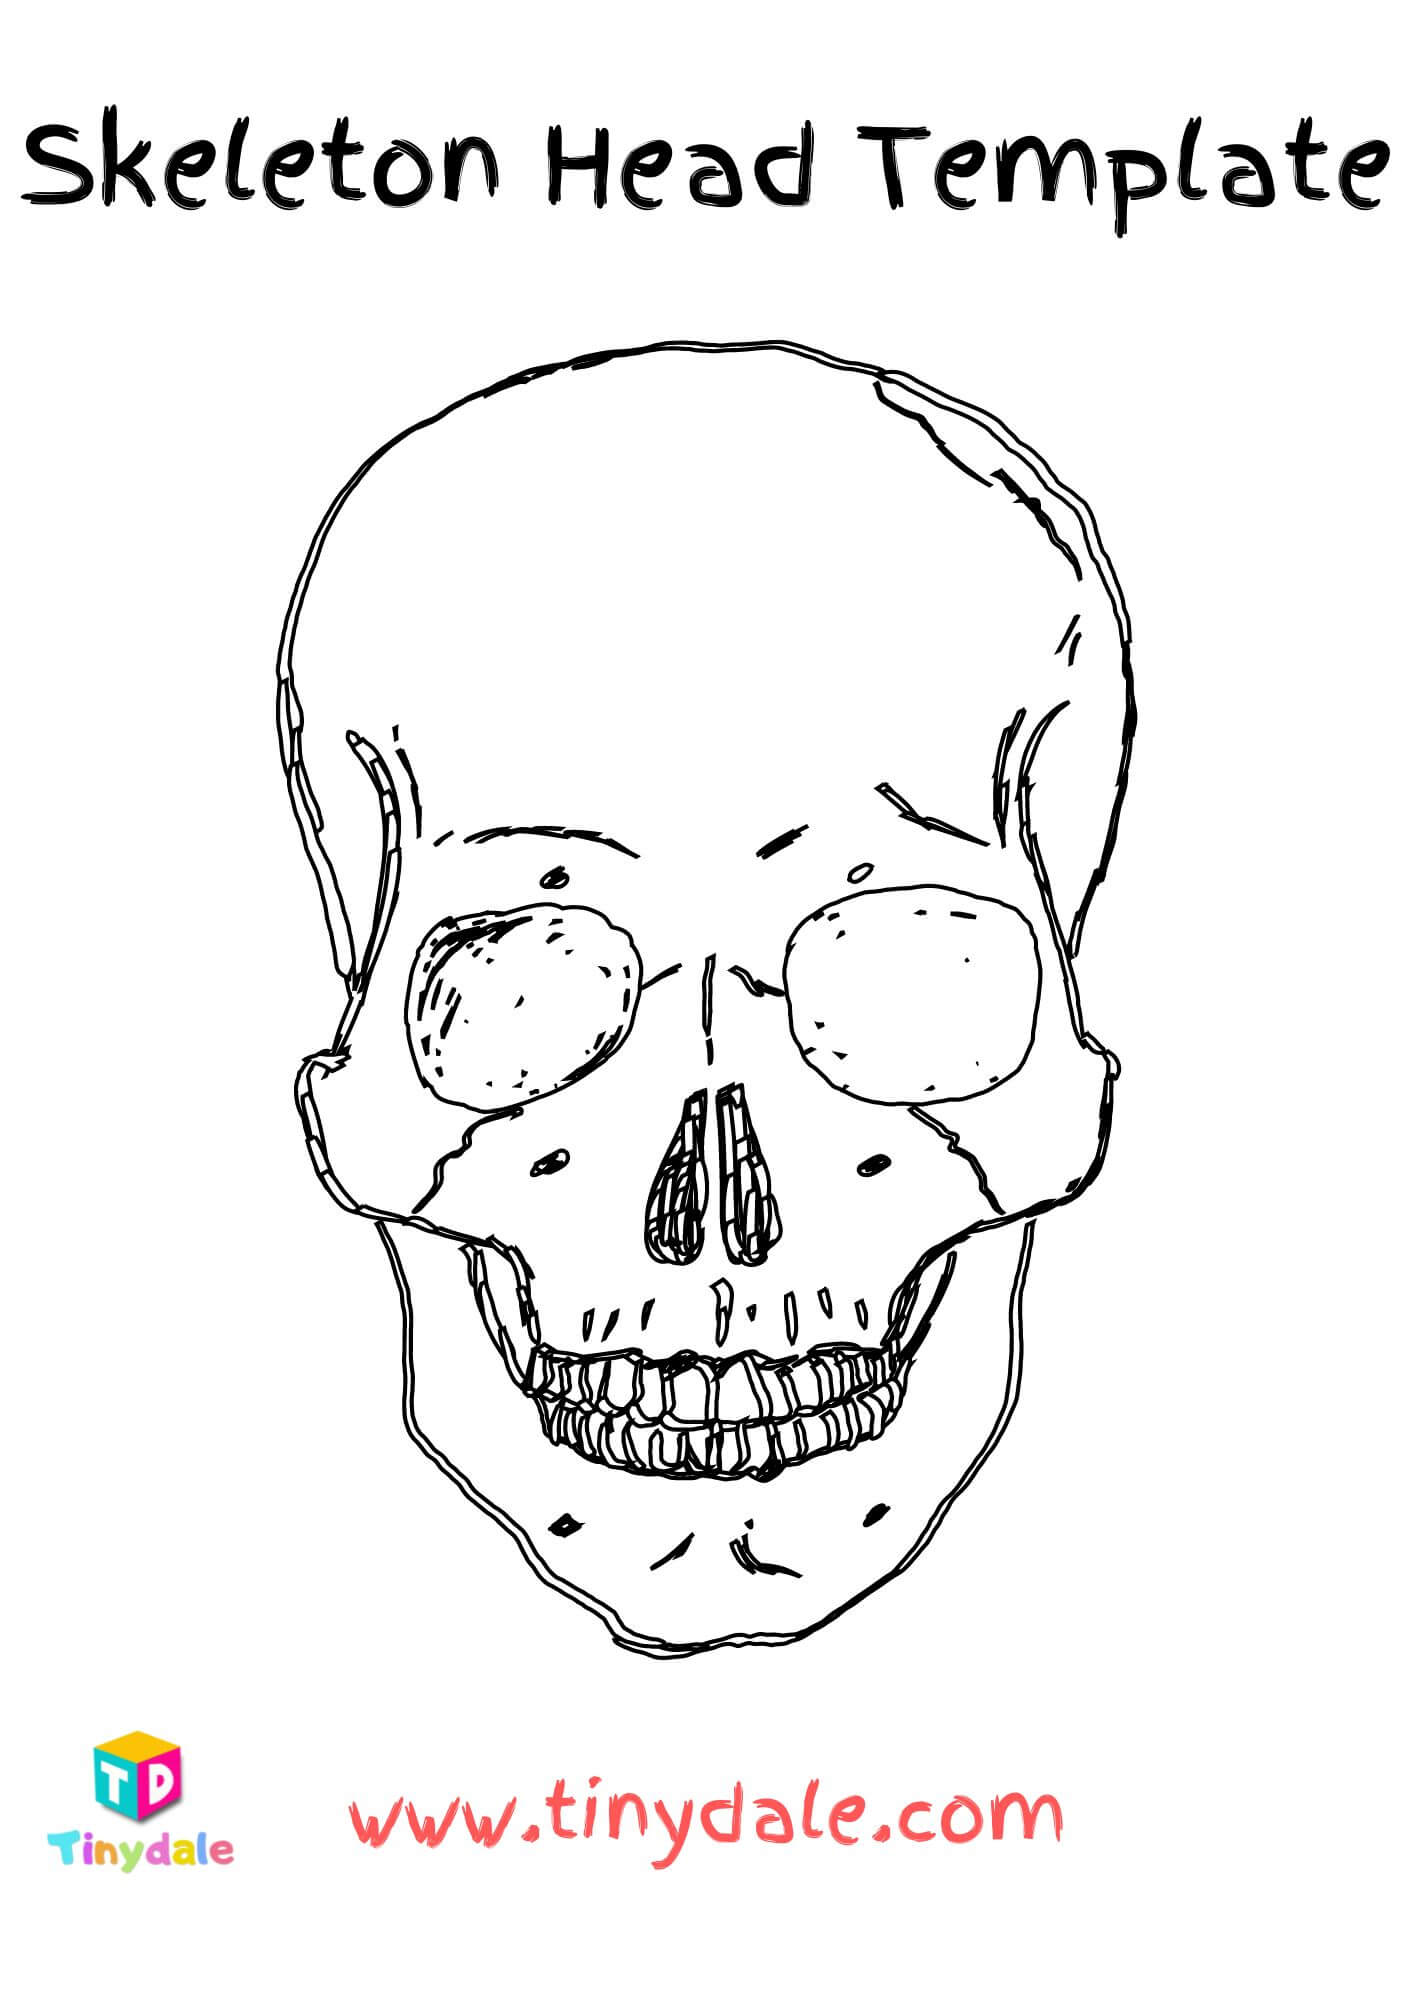 Skeleton Head Template